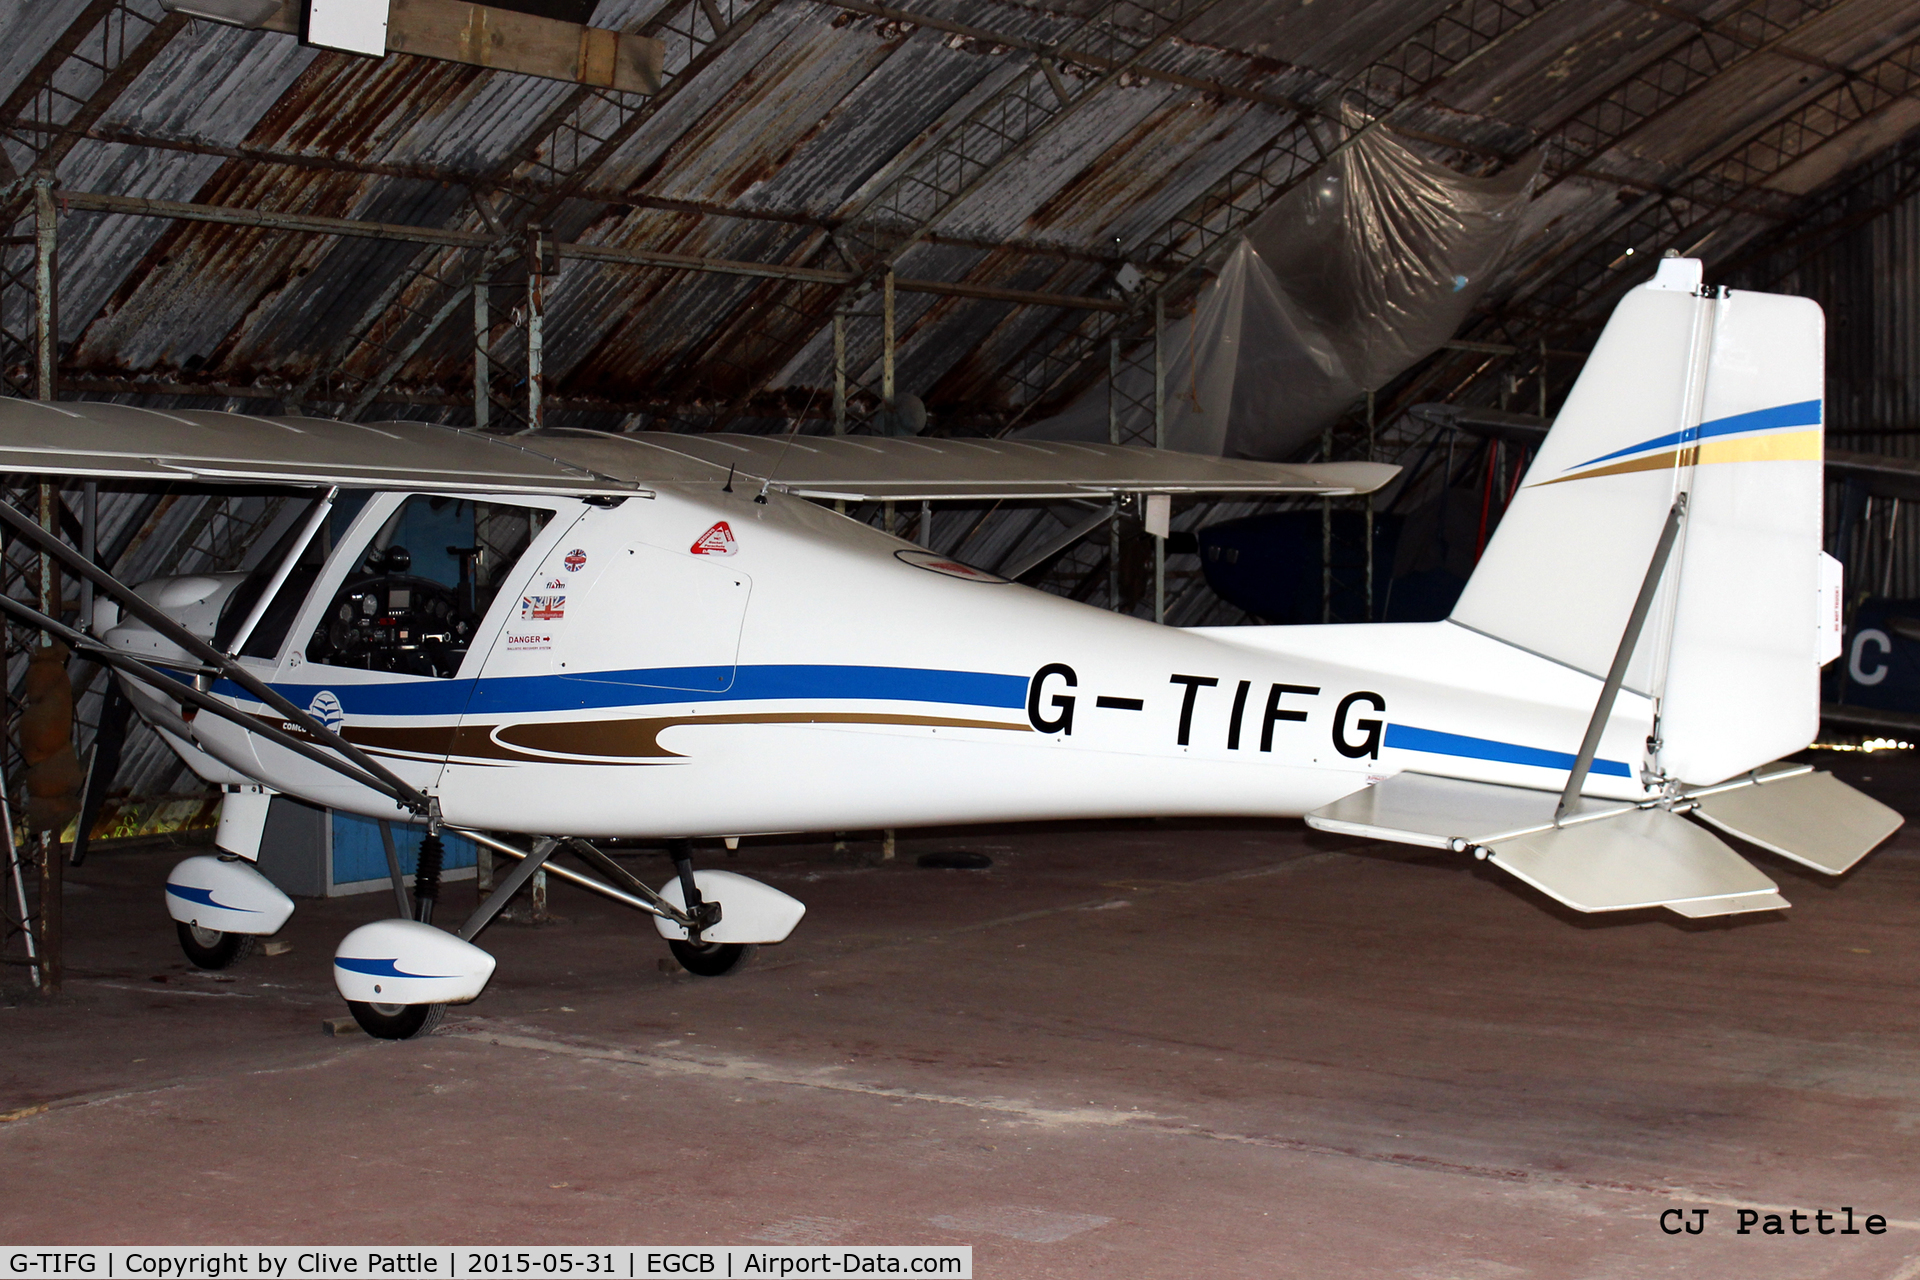 G-TIFG, 2010 Comco Ikarus C42 FB80 C/N 1009-7119, Tucked away in a hangar at Barton, EGCB